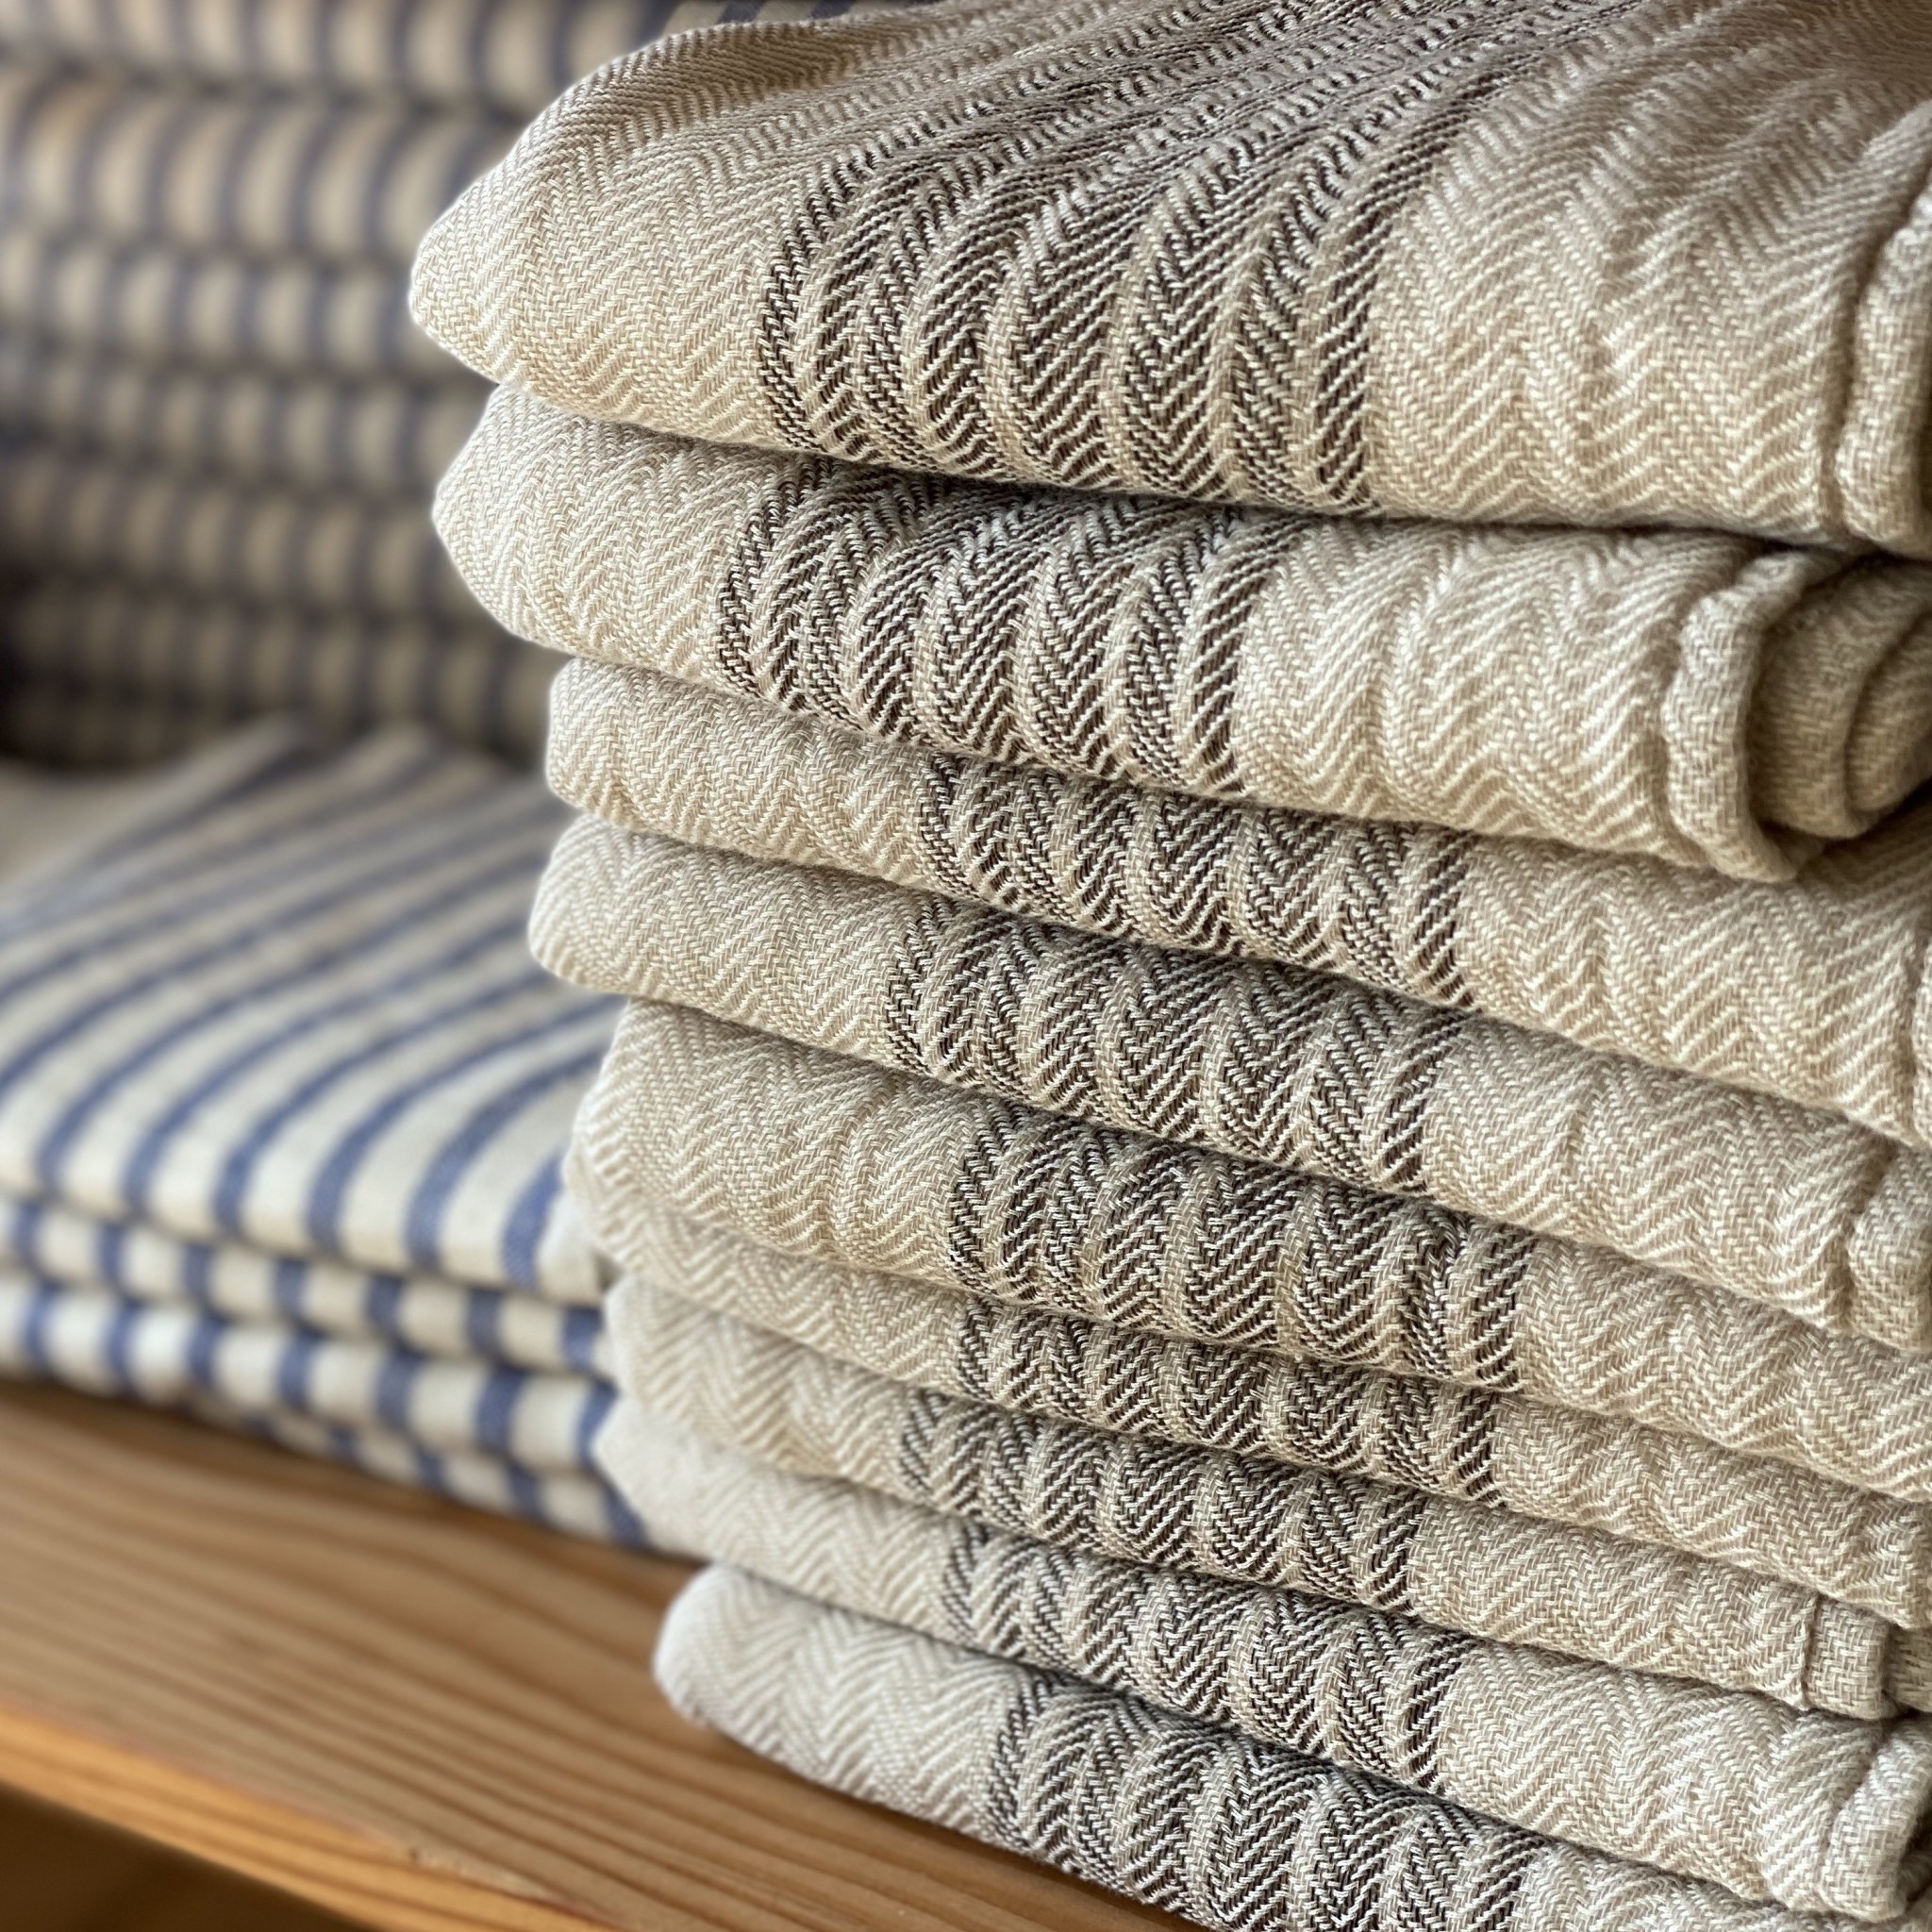 Japanese Linen Stripe Hand Towel – Black/Grey